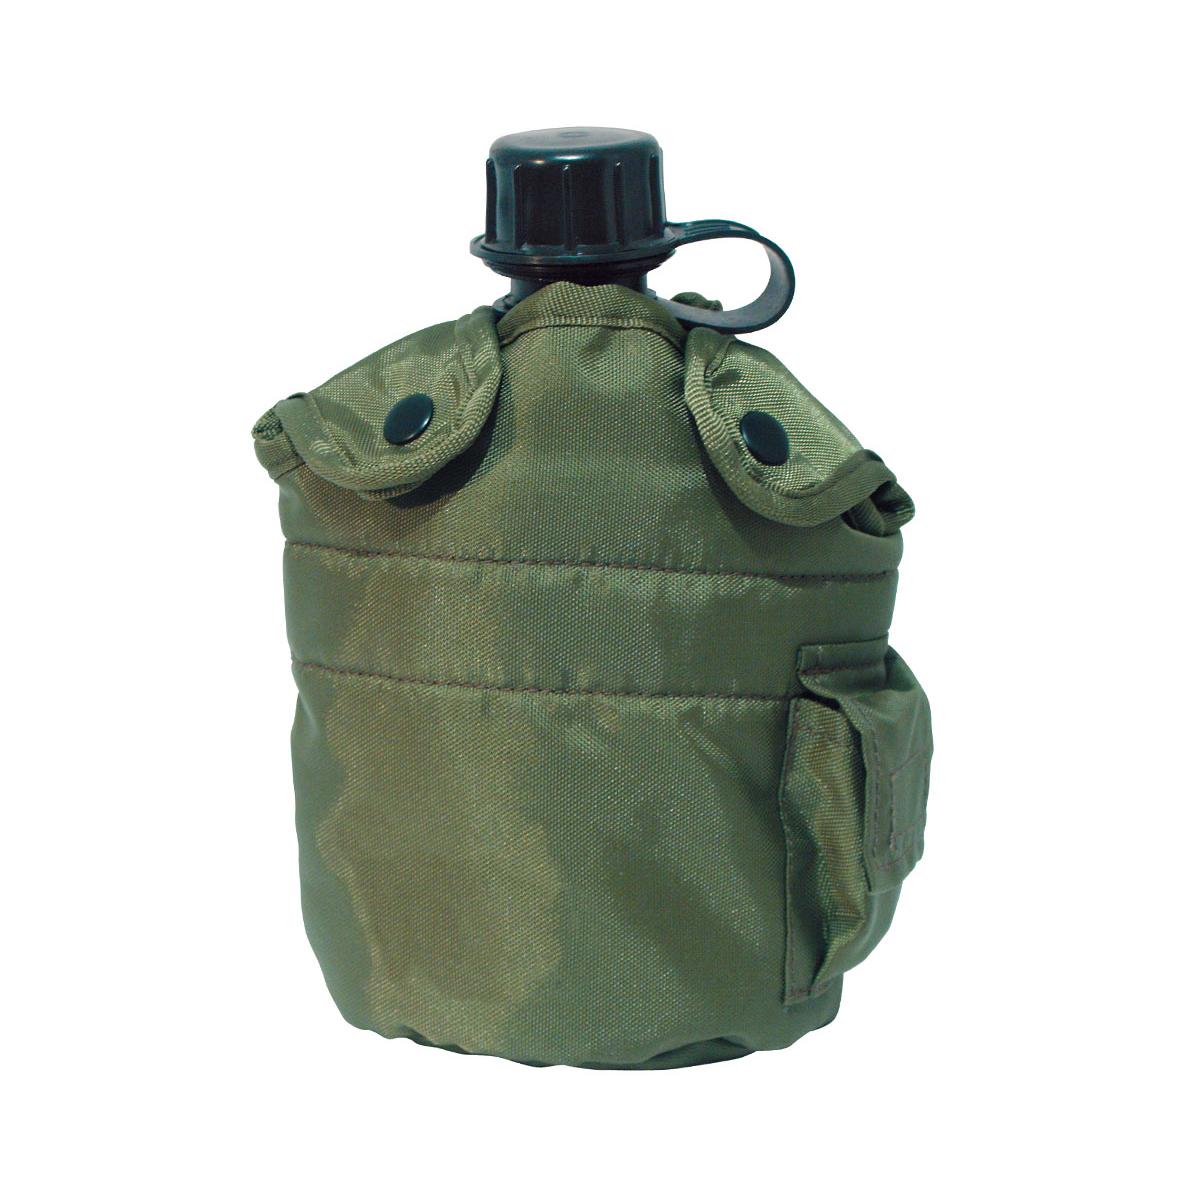 Feldflasche Army Style oliv